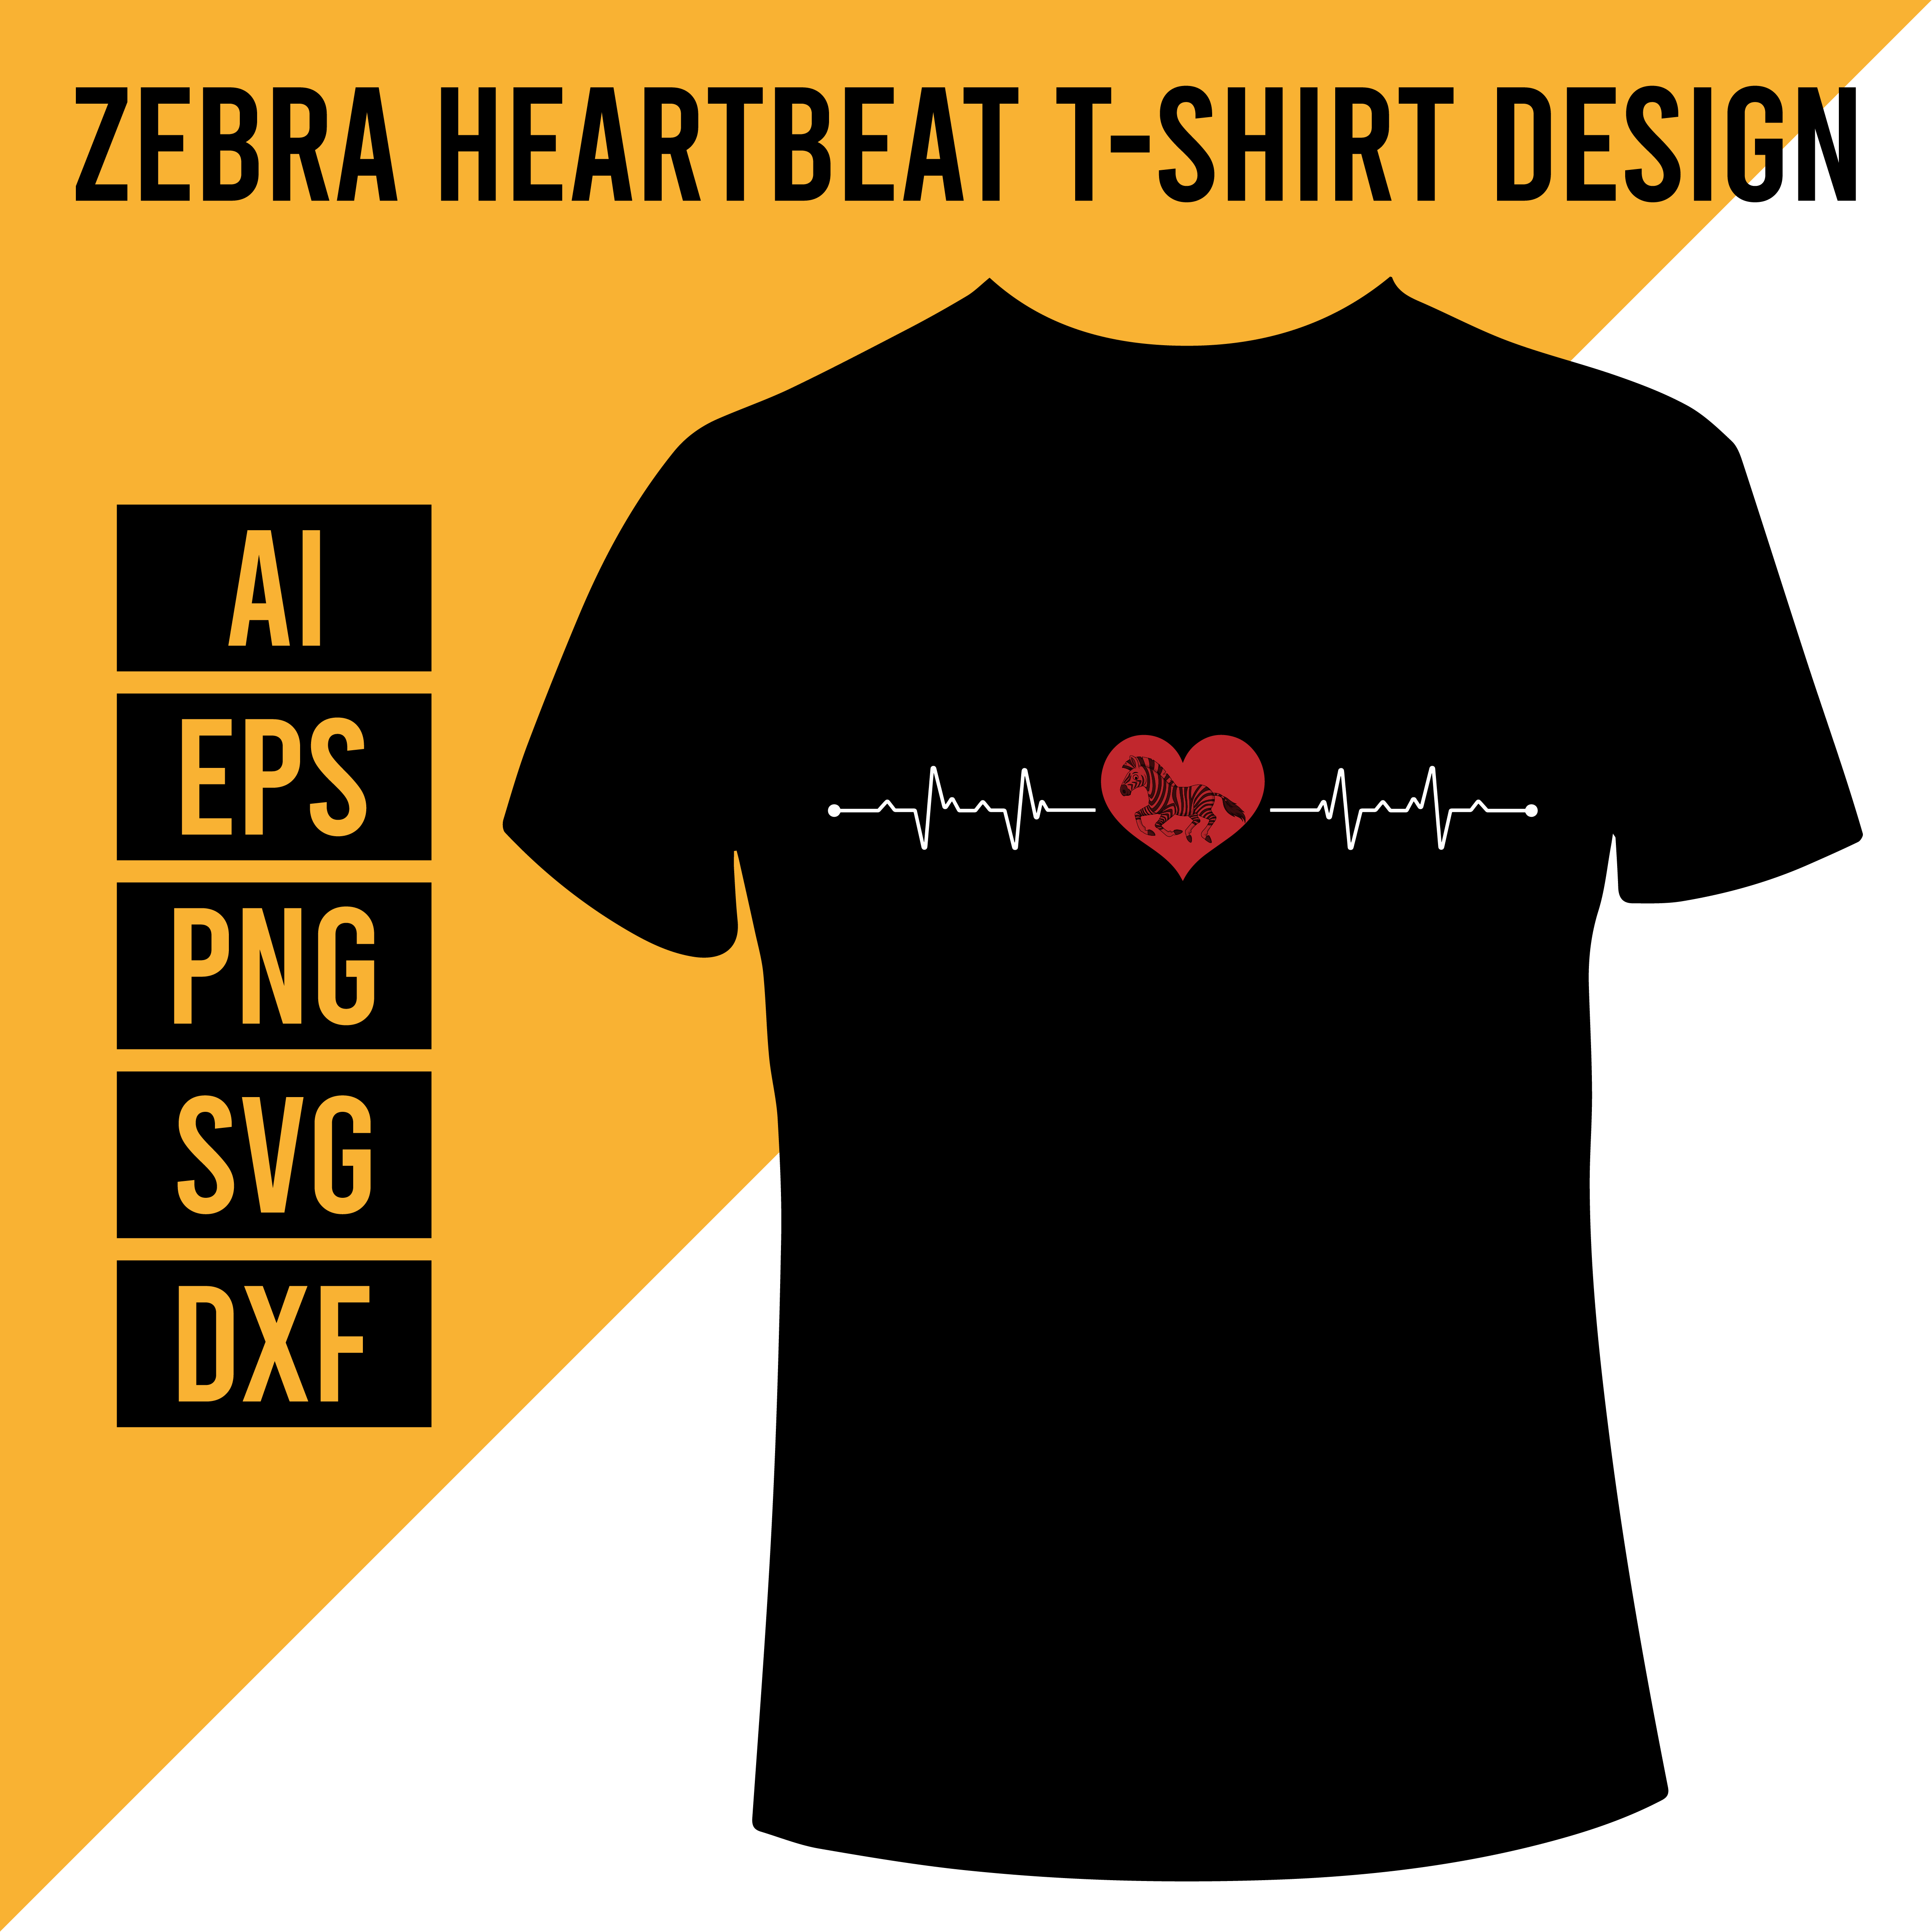 Zebra Heartbeat T-Shirt Design cover image.